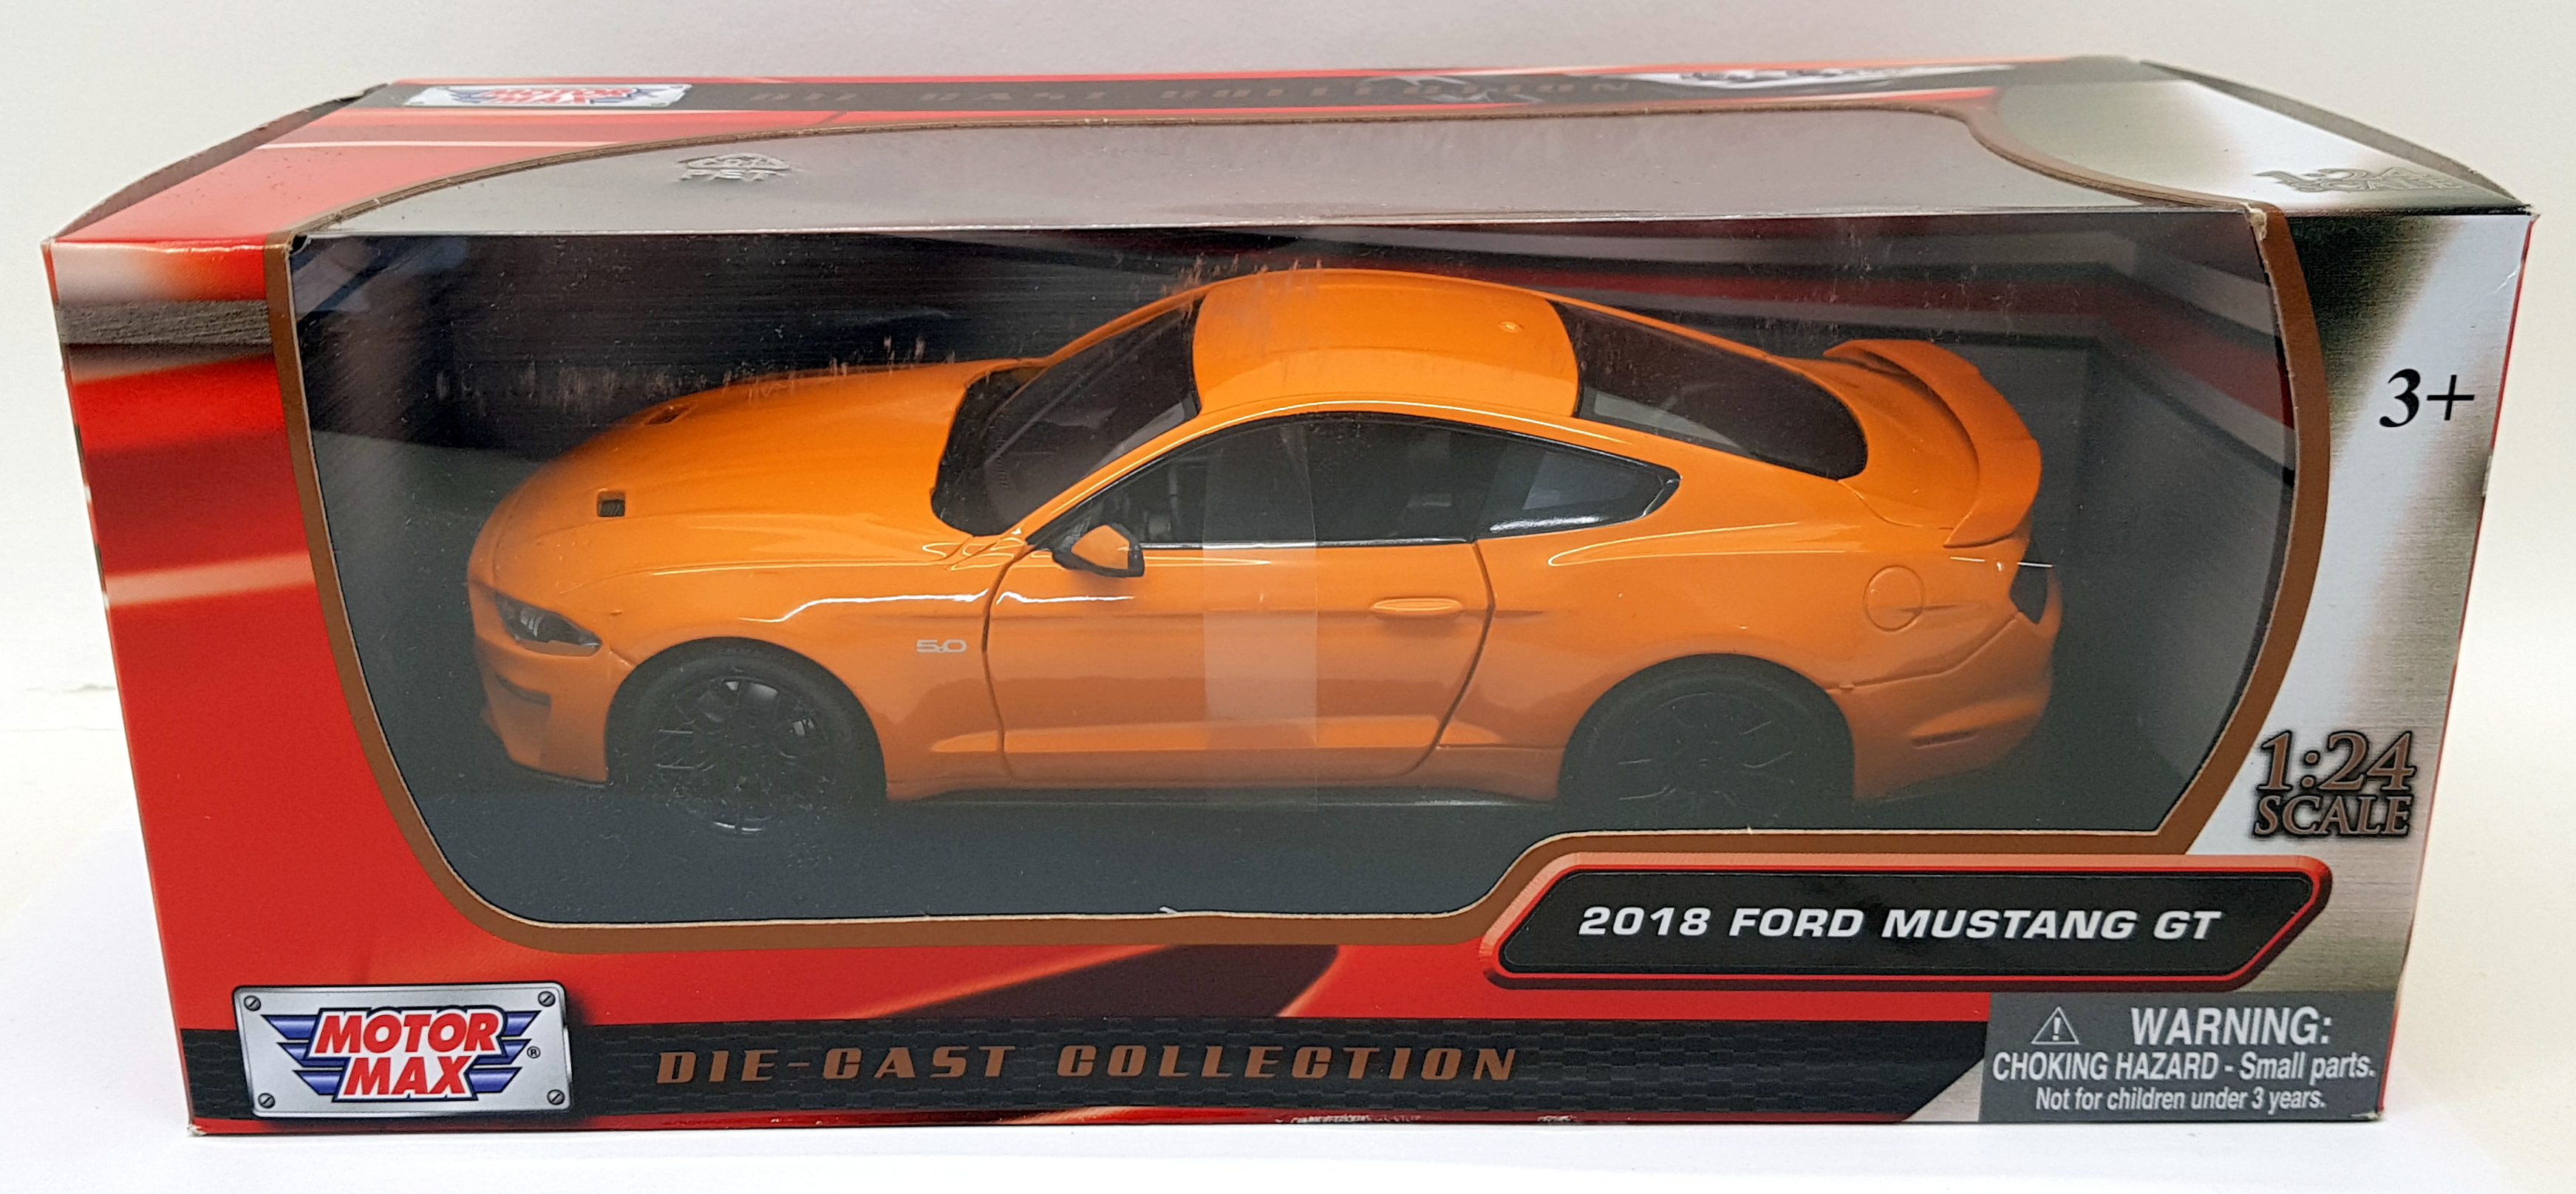 Motormax 1/24 Scale Model Car 79352 - 2018 Ford Mustang GT - Orange | eBay